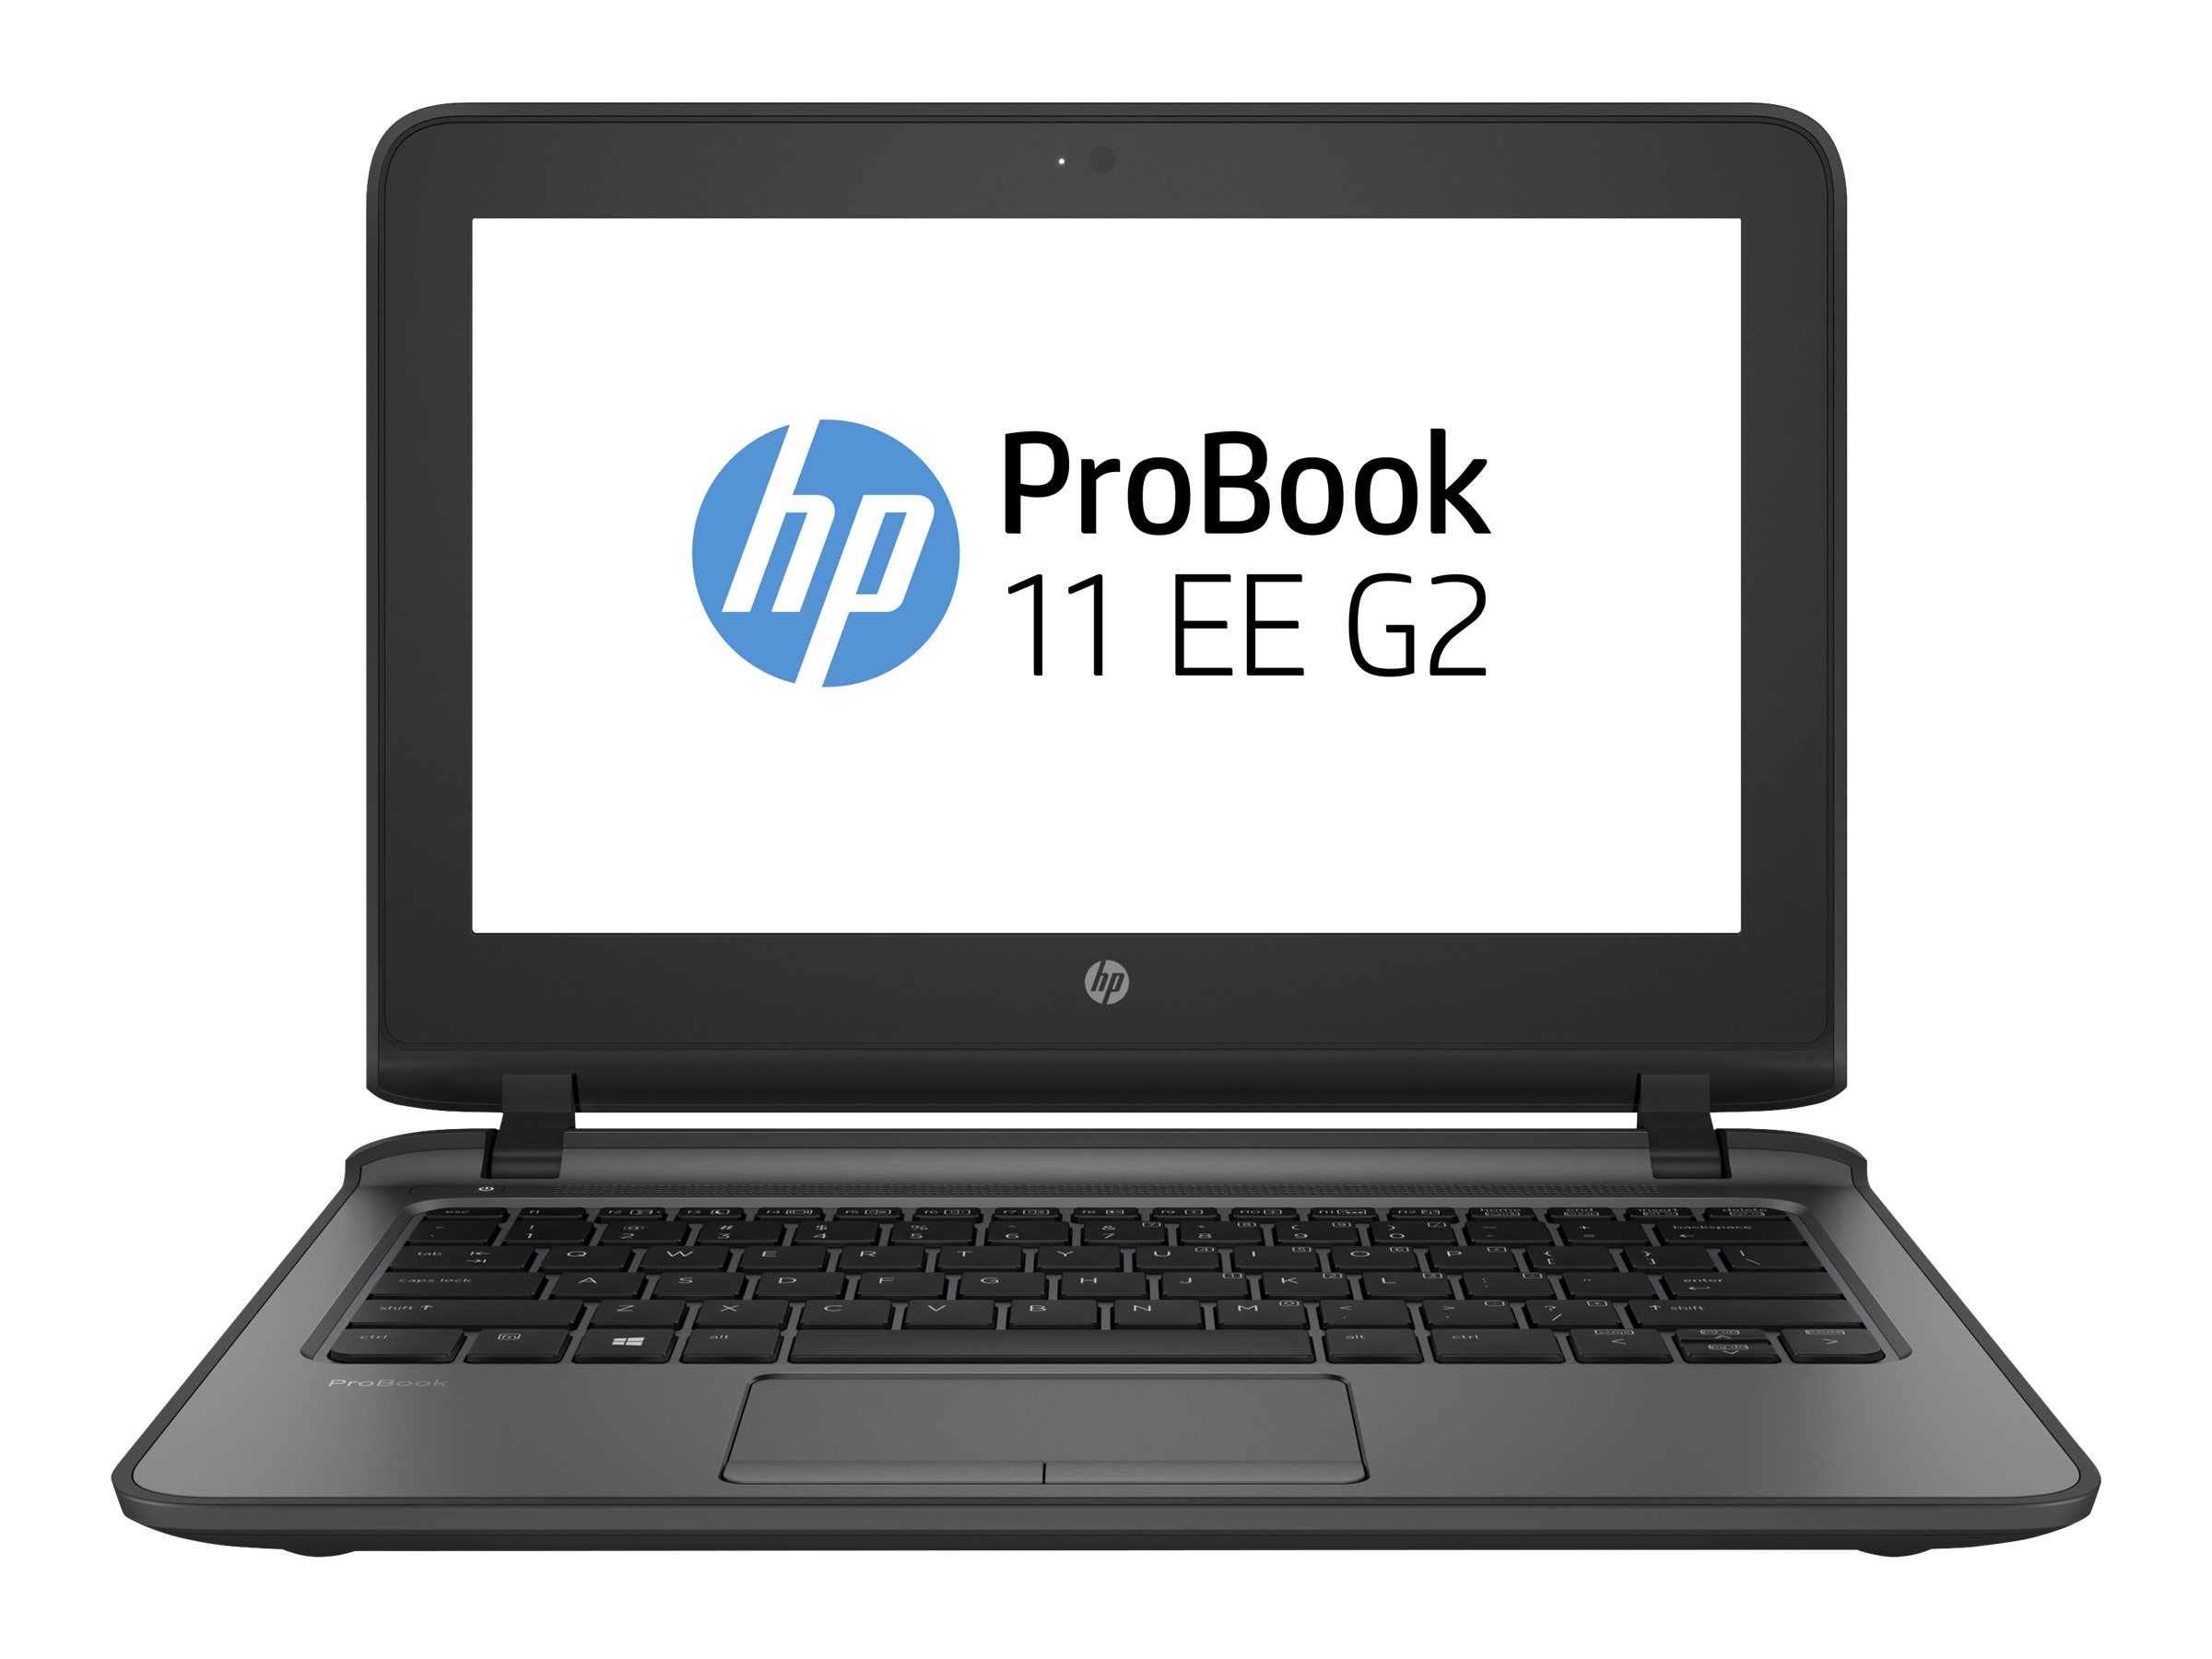 HP ProBook 11 G2 Education Edition Notebook